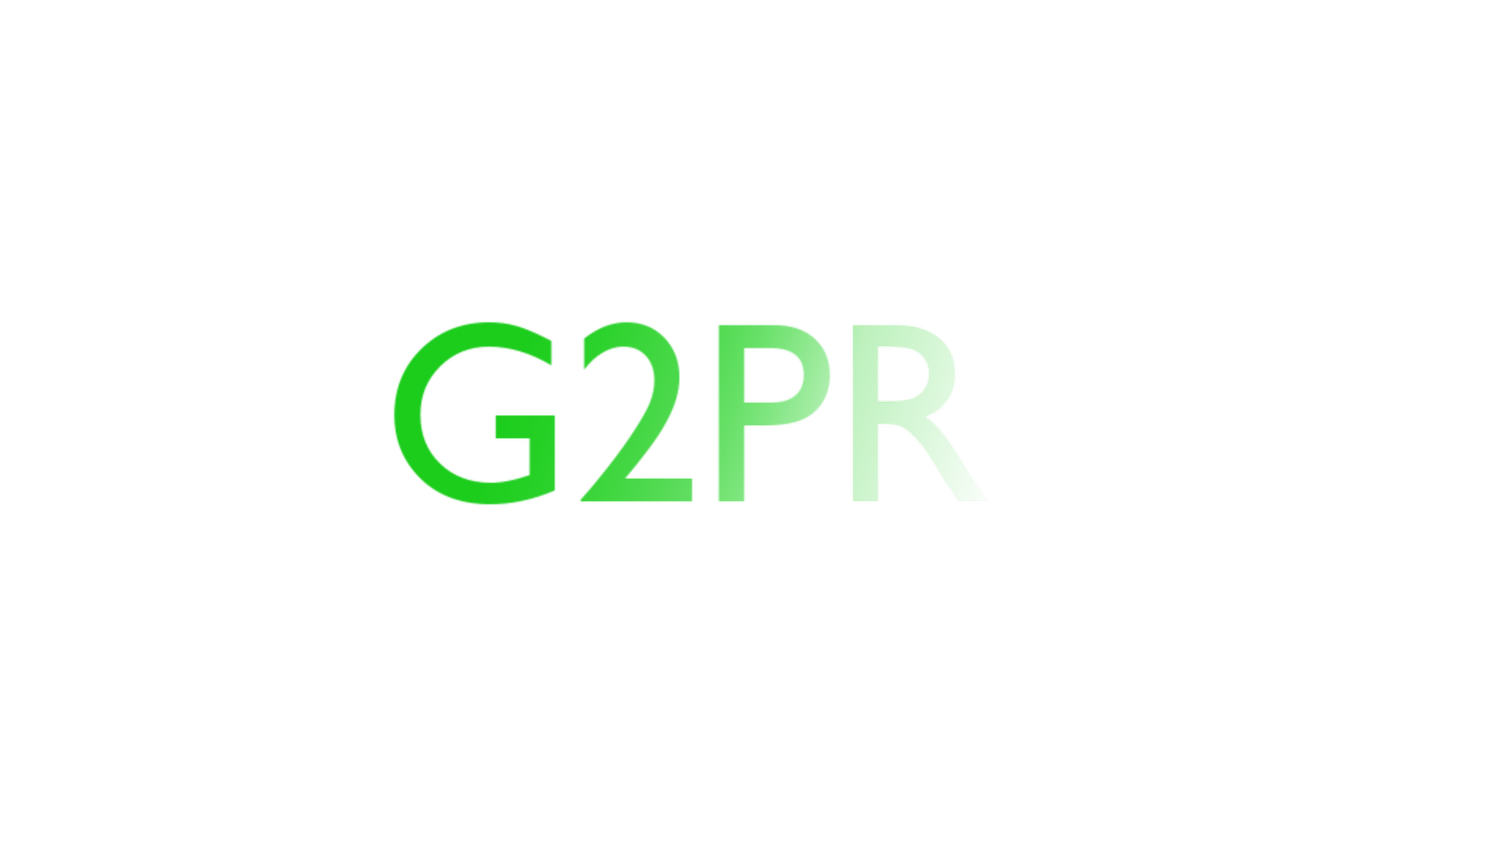 G2PR - Purposeful Growth